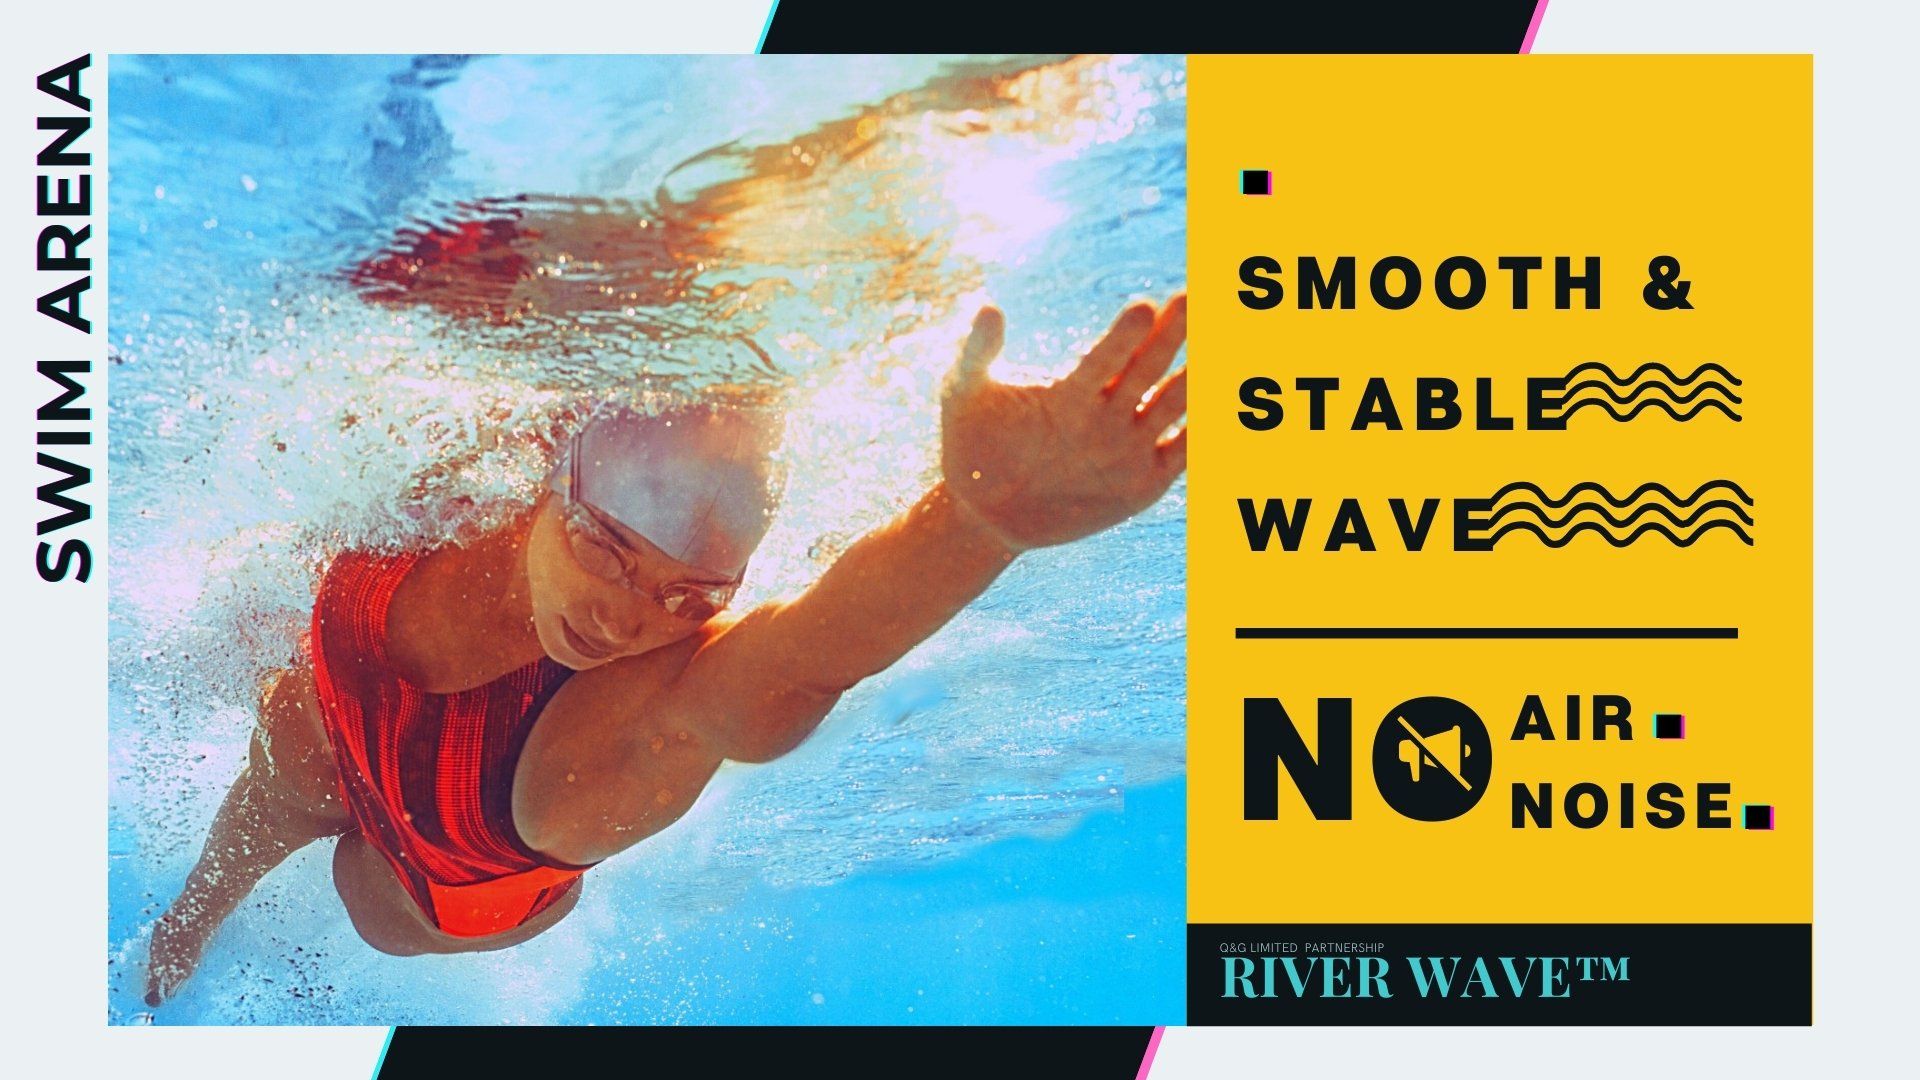 smooth and stable counter current wave for swim spa, เครื่องว่ายน้ำทวนกระแสที่ทำให้ว่ายน้ำได้ดี